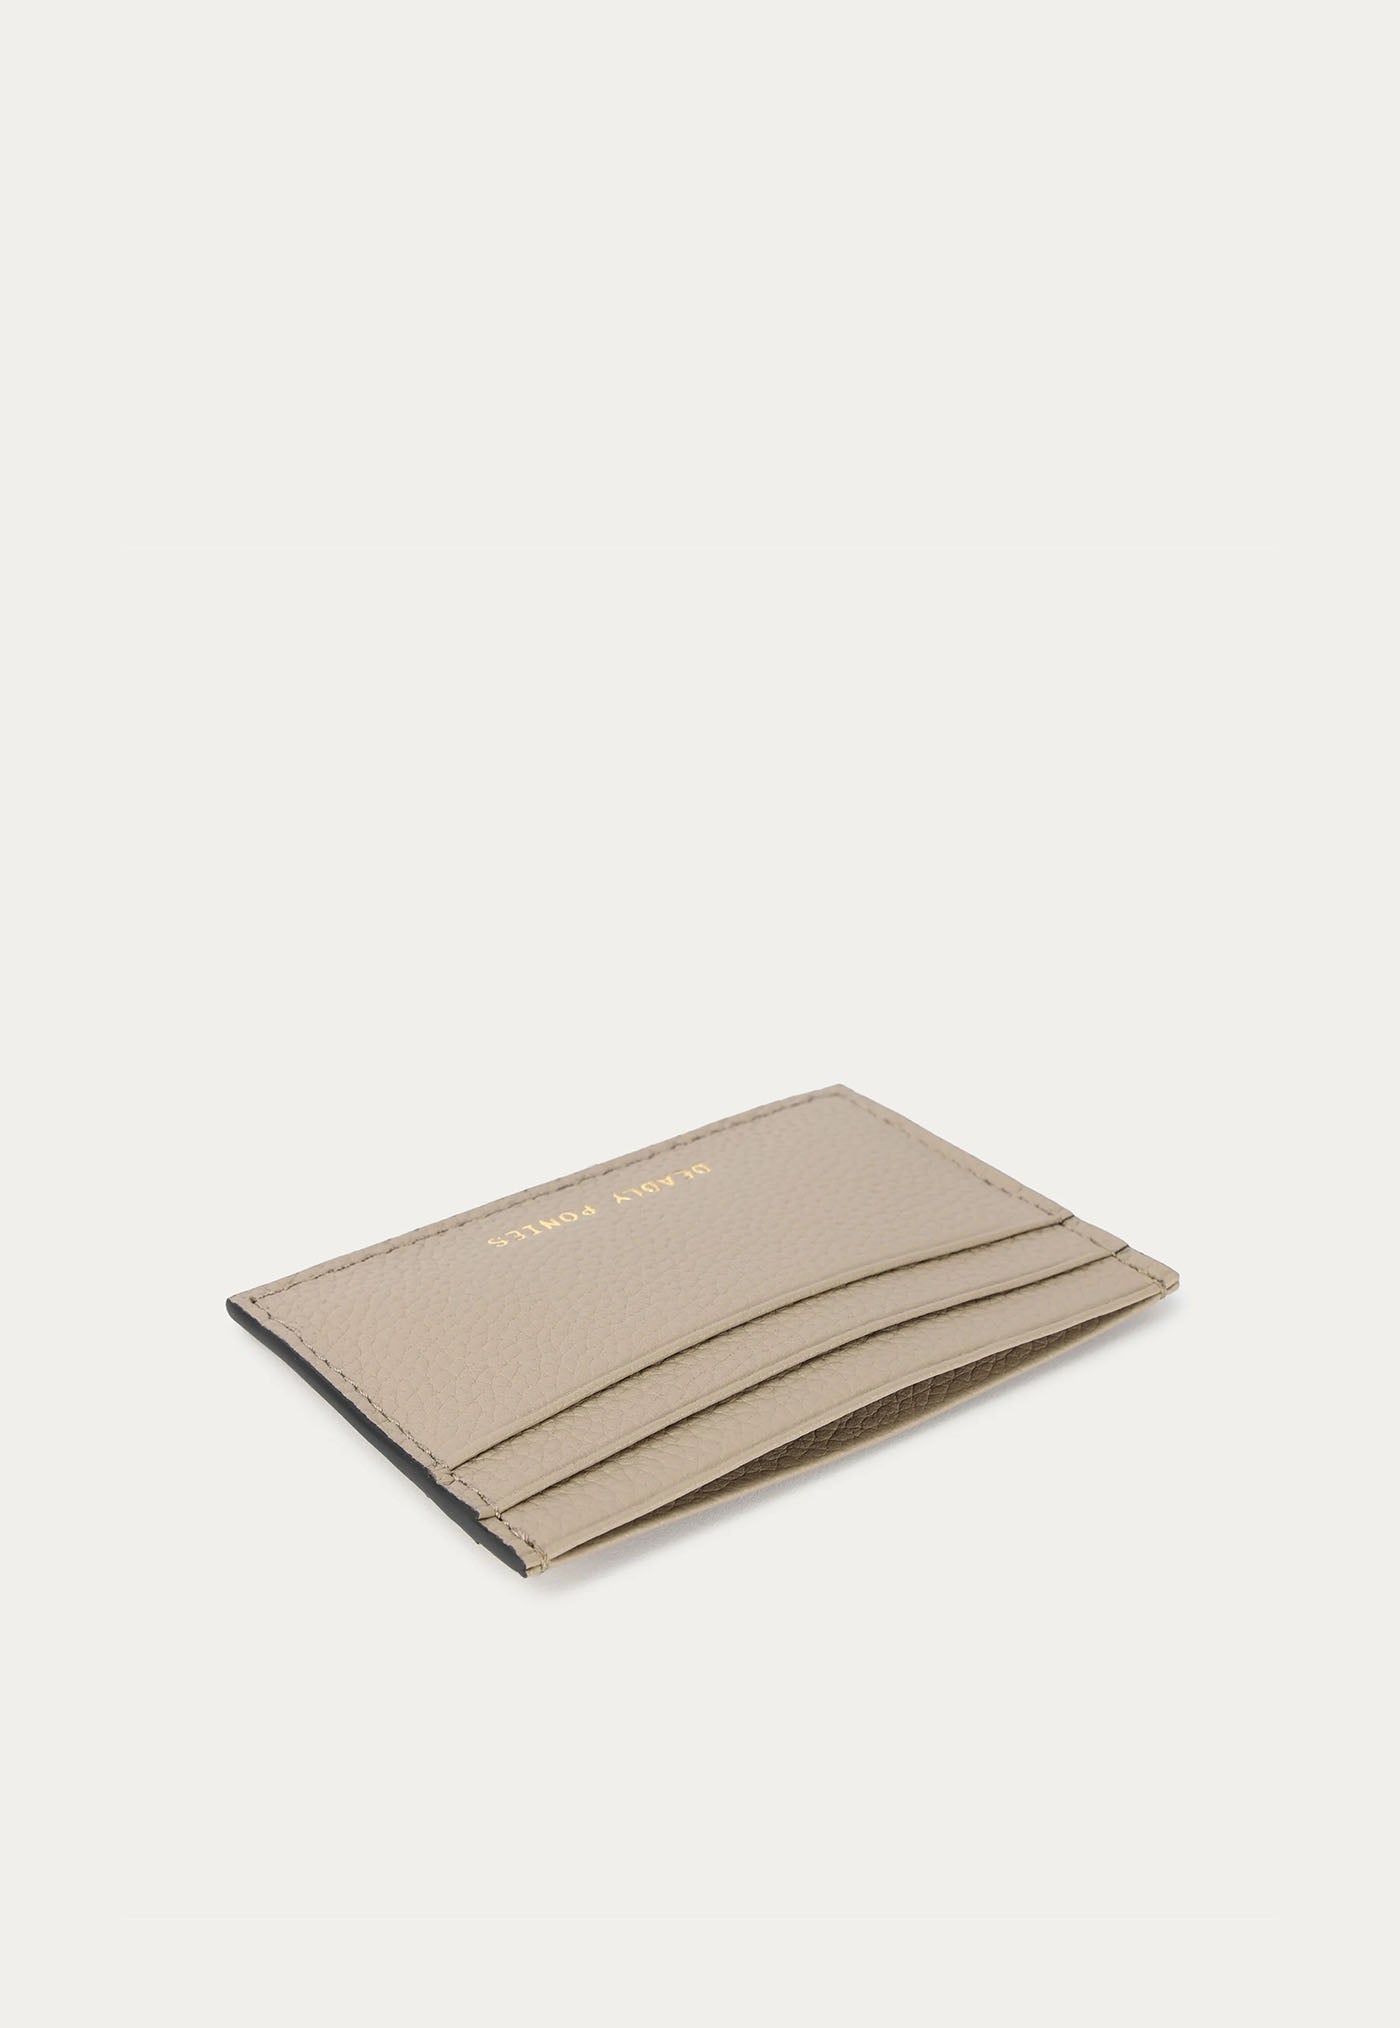 Card File - Shiitake sold by Angel Divine